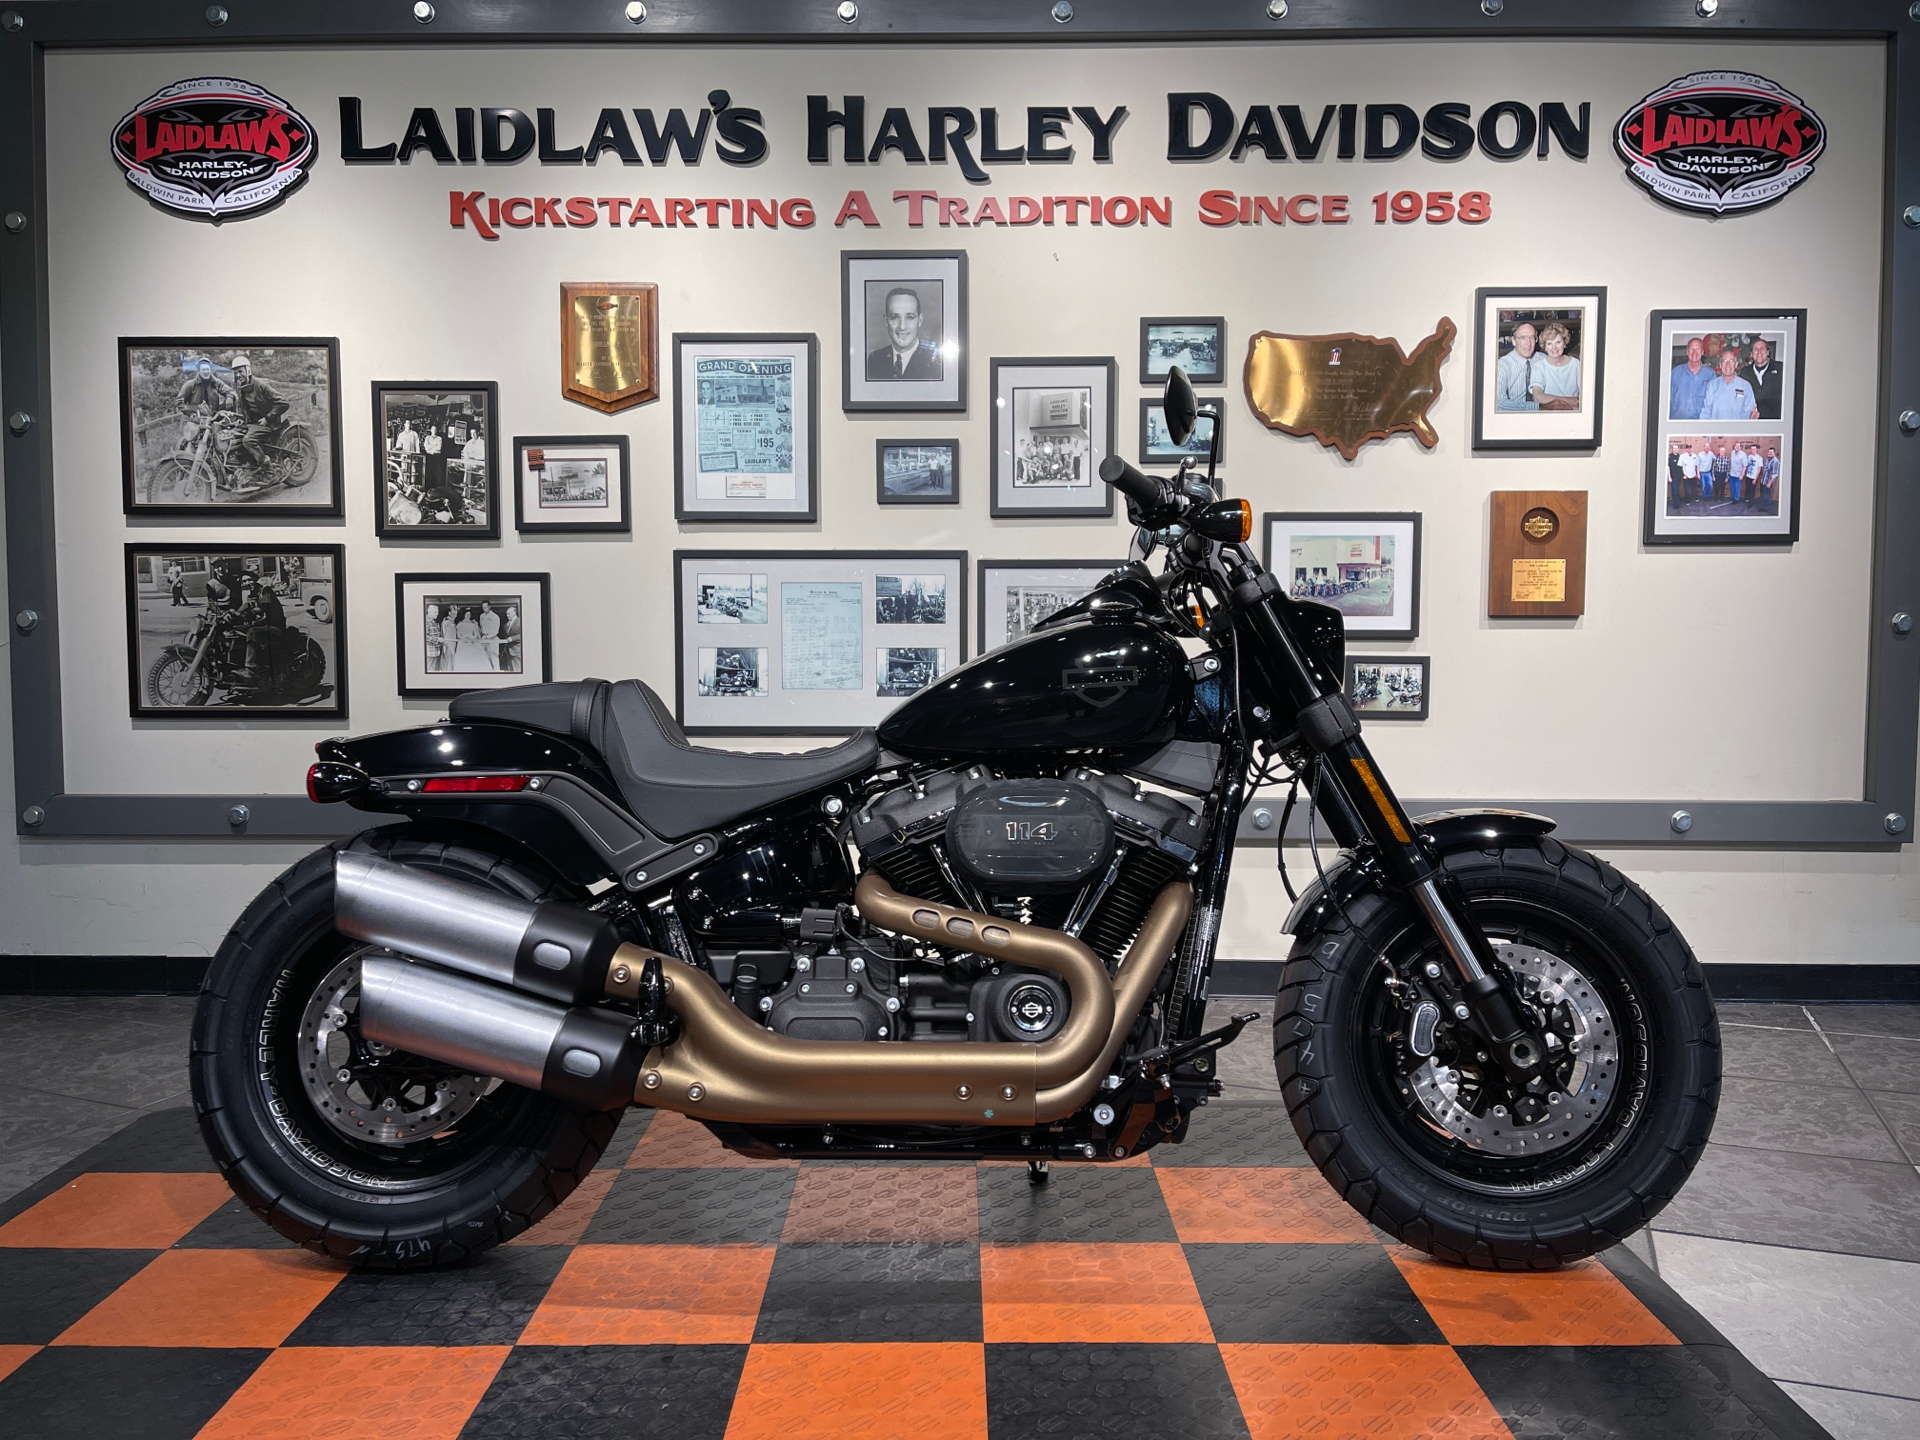 New 2021 Harley Davidson Fat Bob 114 Vivid Black Baldwin Park Ca 28951